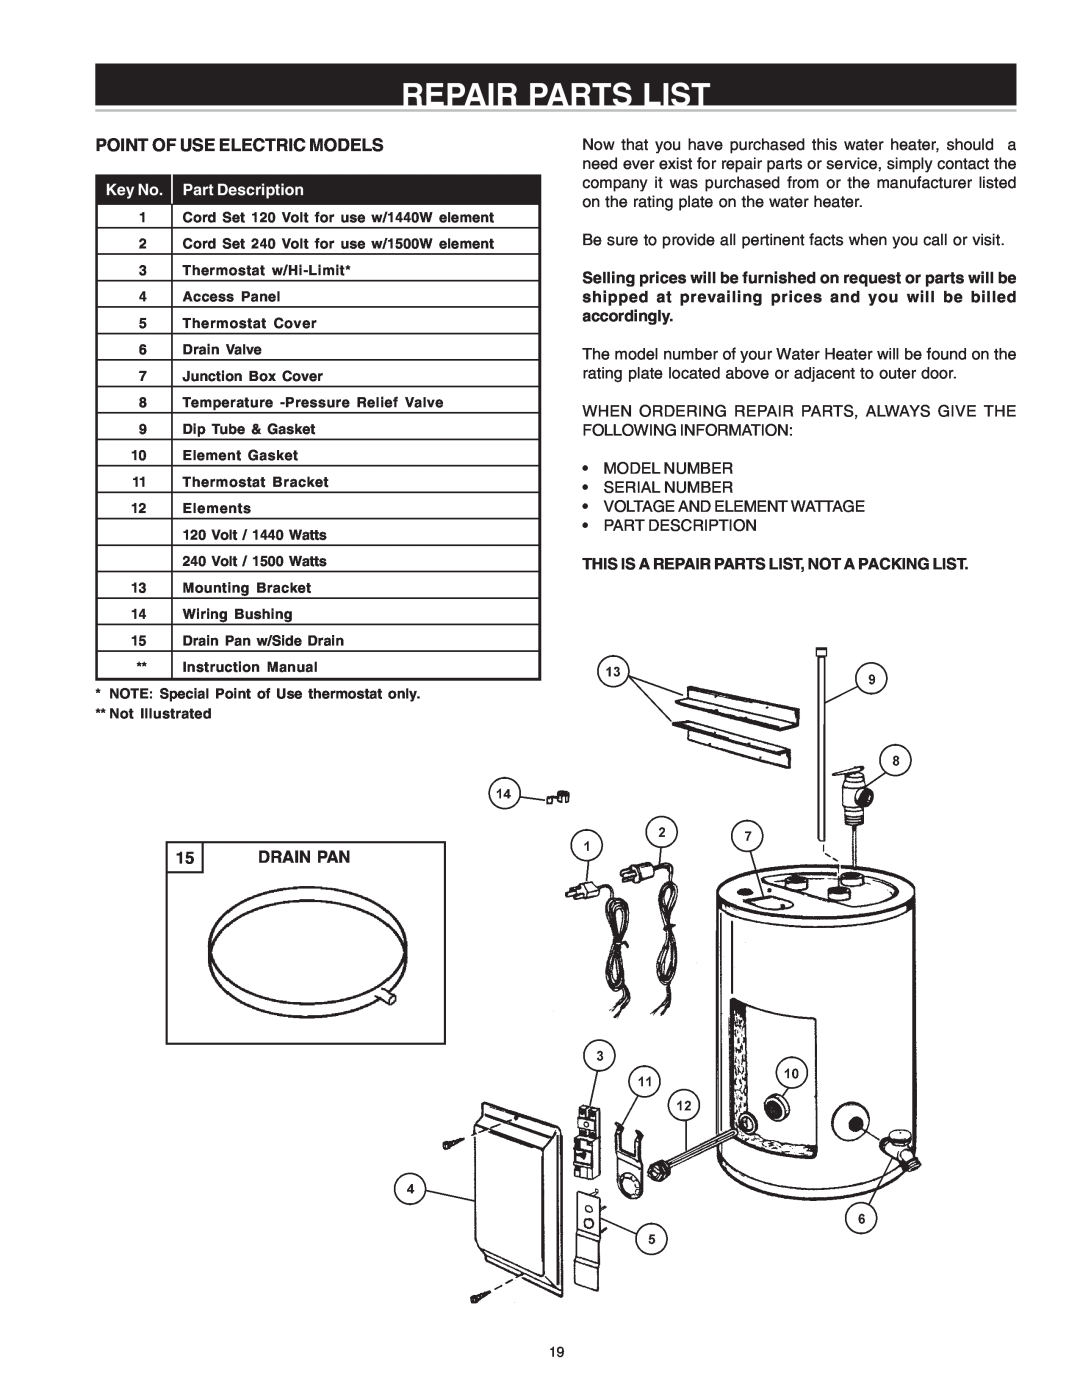 Reliance Water Heaters 184735-000 Repair Parts List, Point Of Use Electric Models, Drain Pan, Part Description 